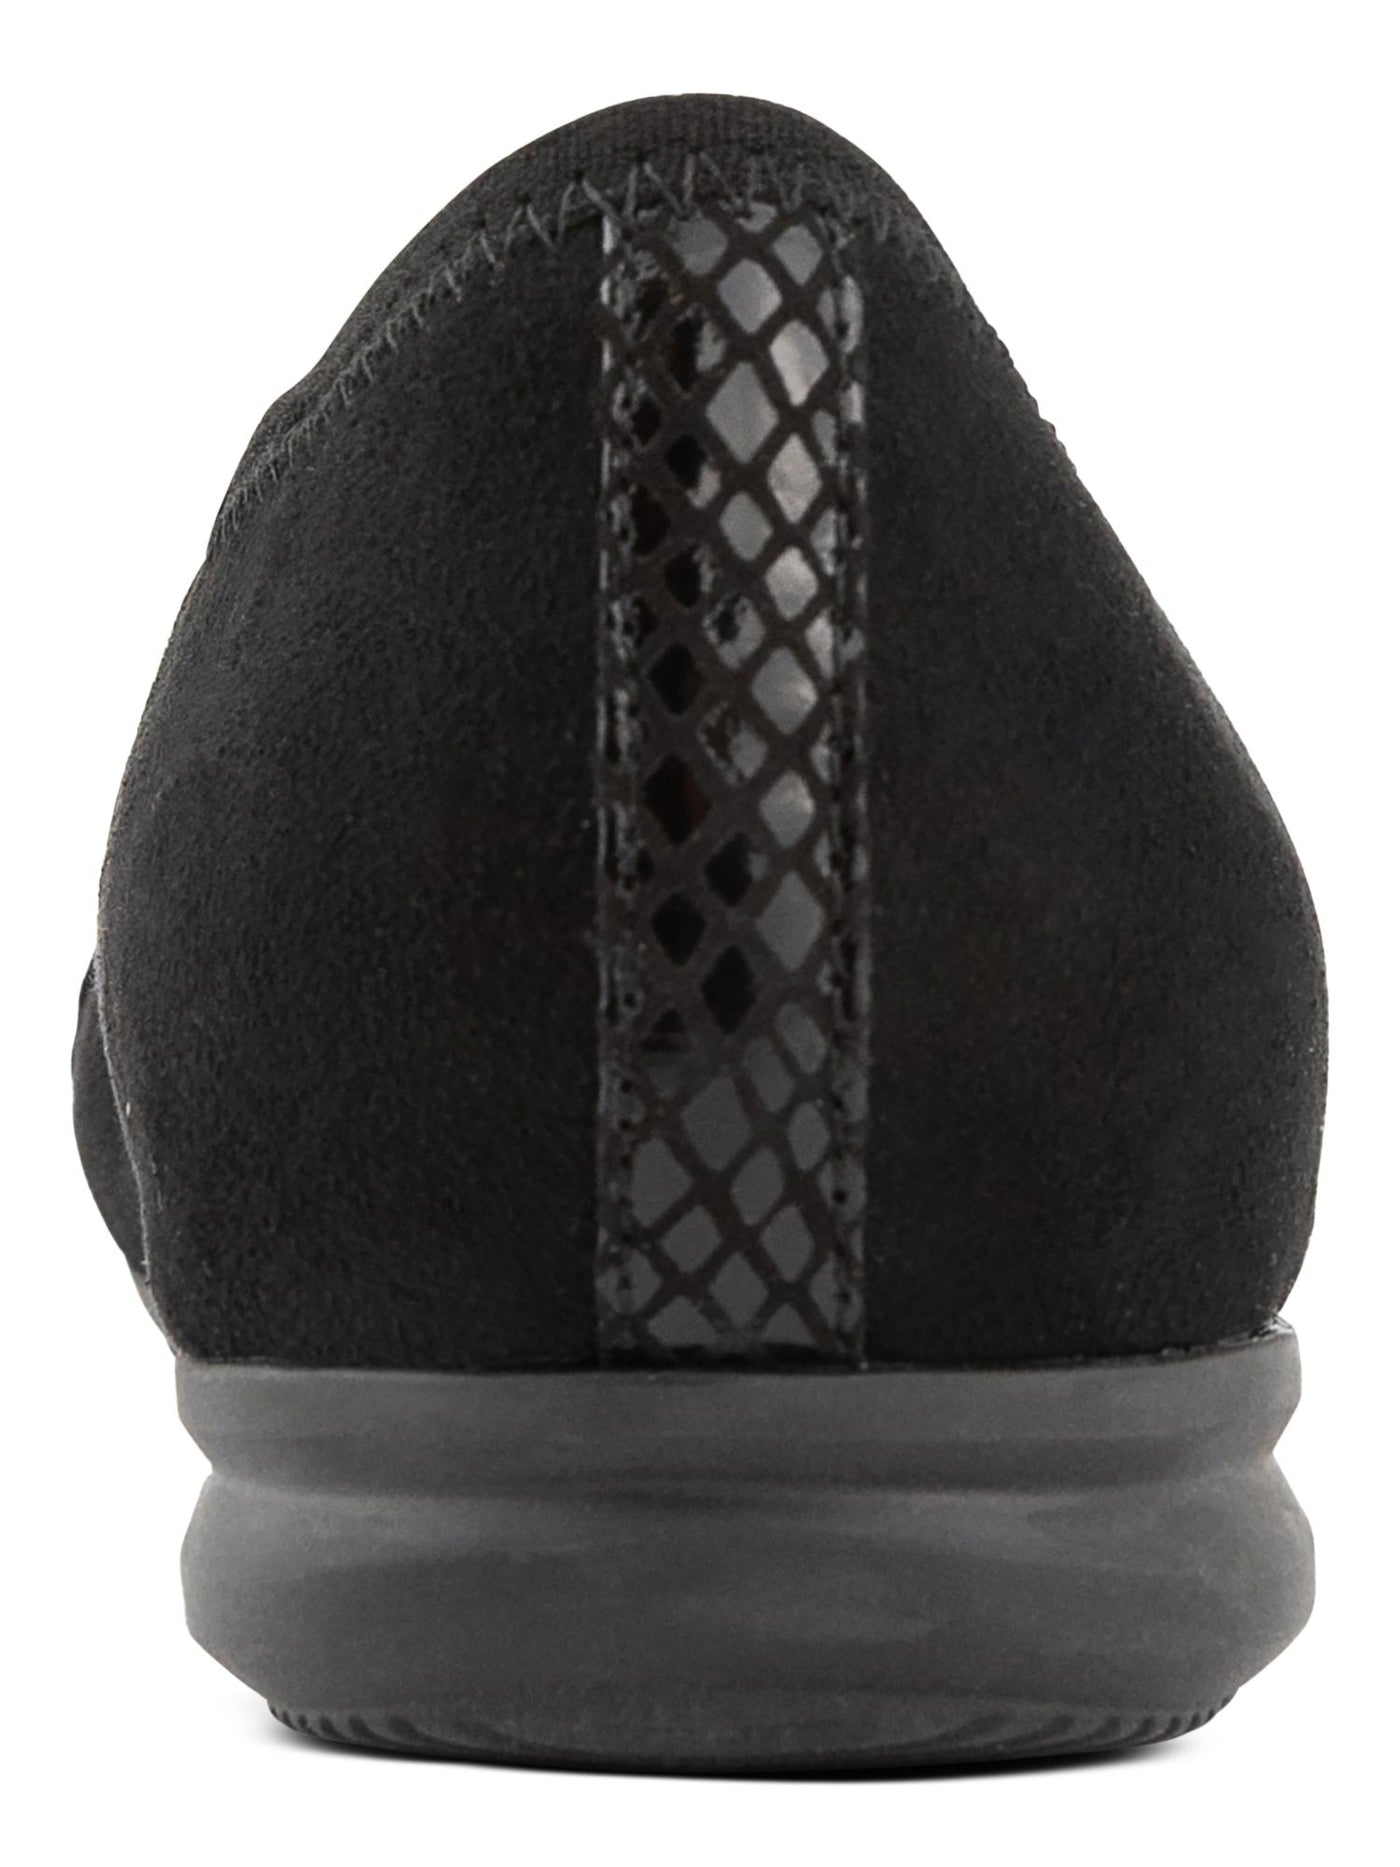 KAREN SCOTT Womens Black Cushioned Tashelle Round Toe Slip On Dress Flats Shoes 5.5 M